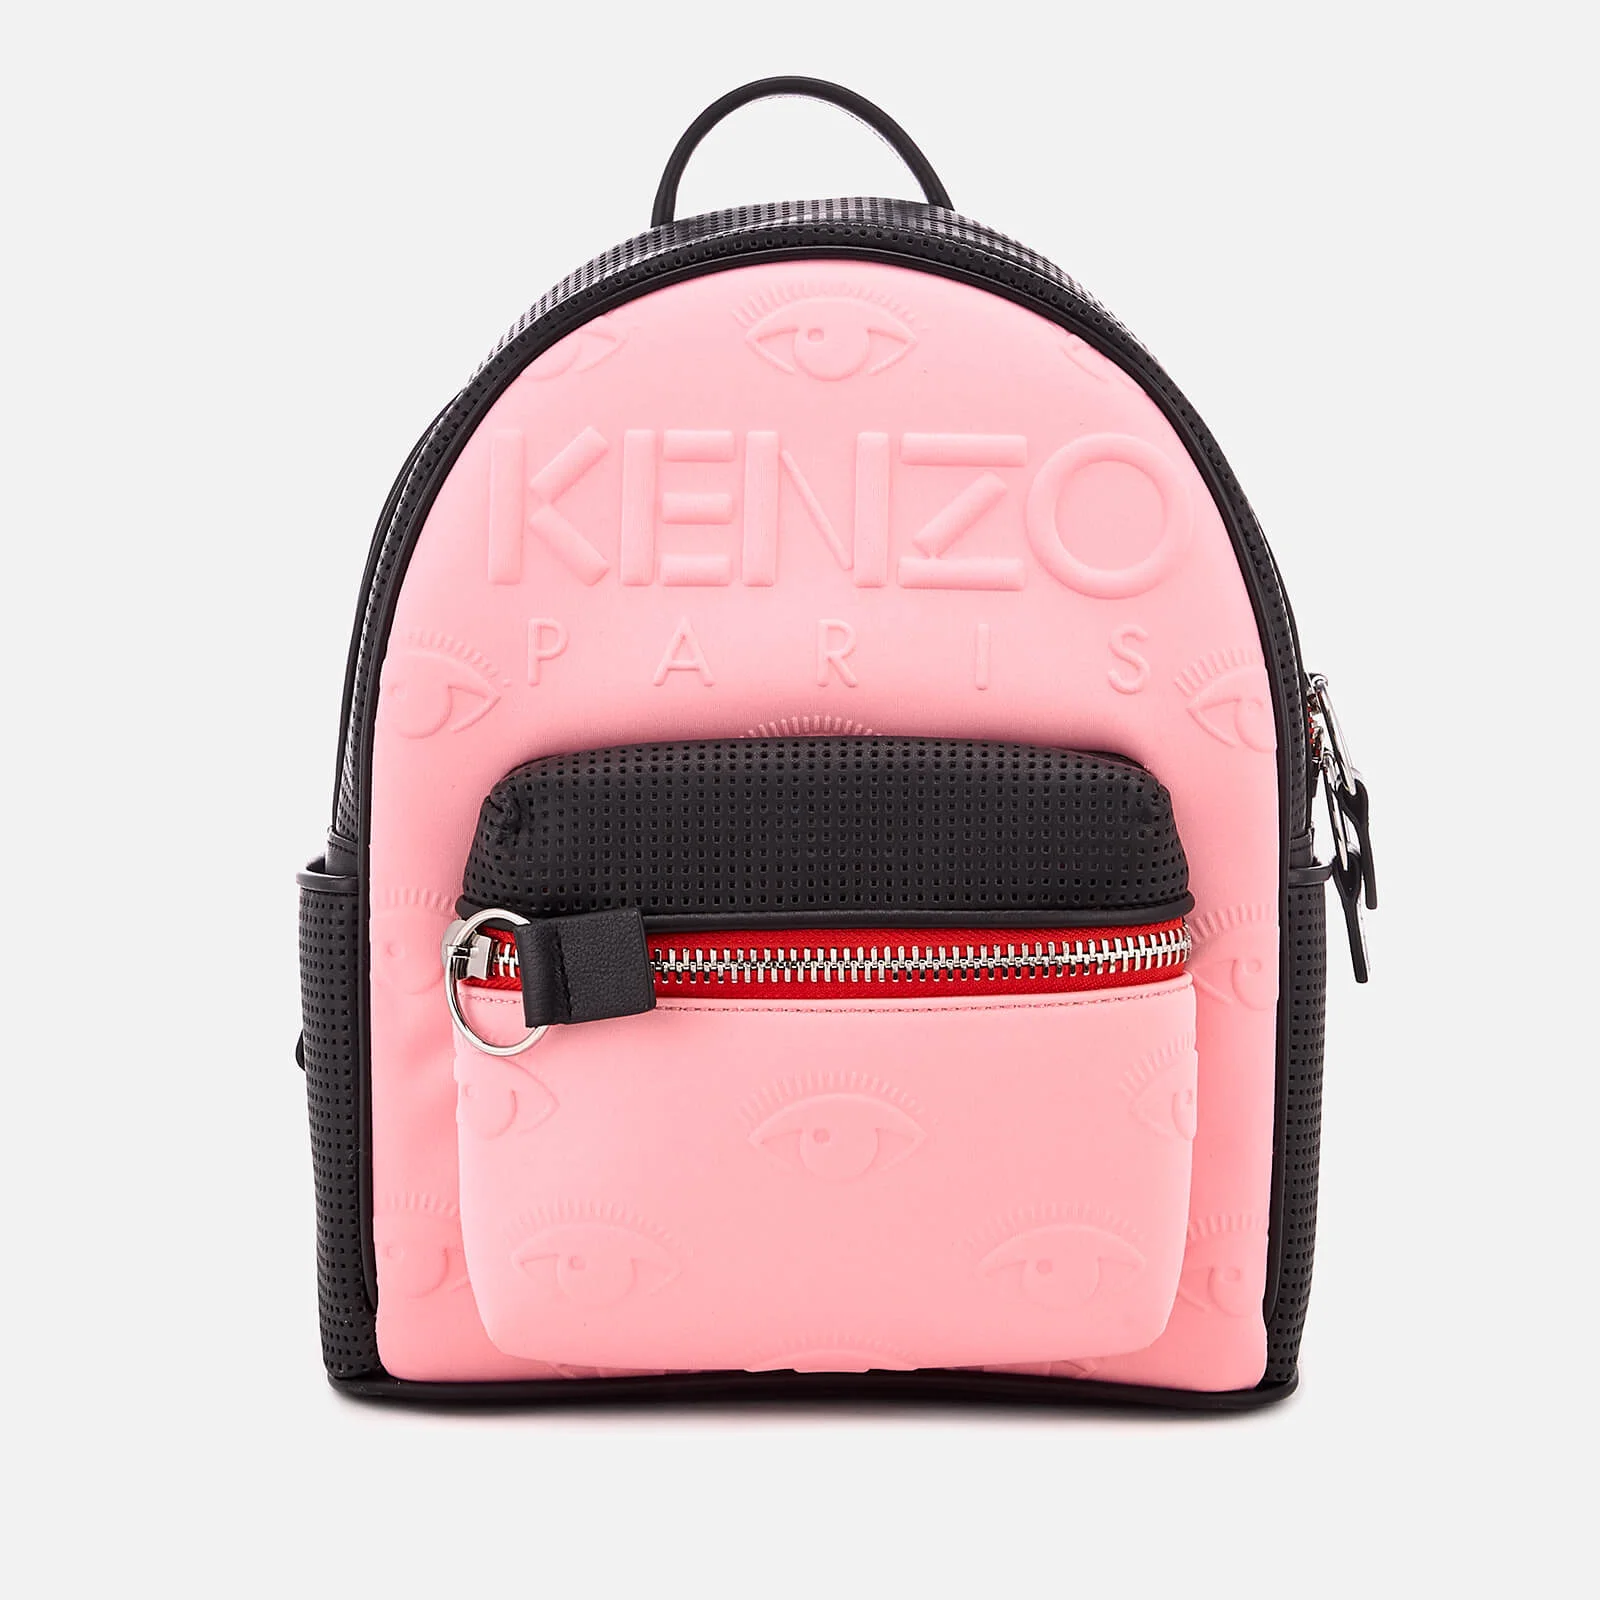 KENZO Women's Kanvas Backpack - Flamingo Pink Image 1